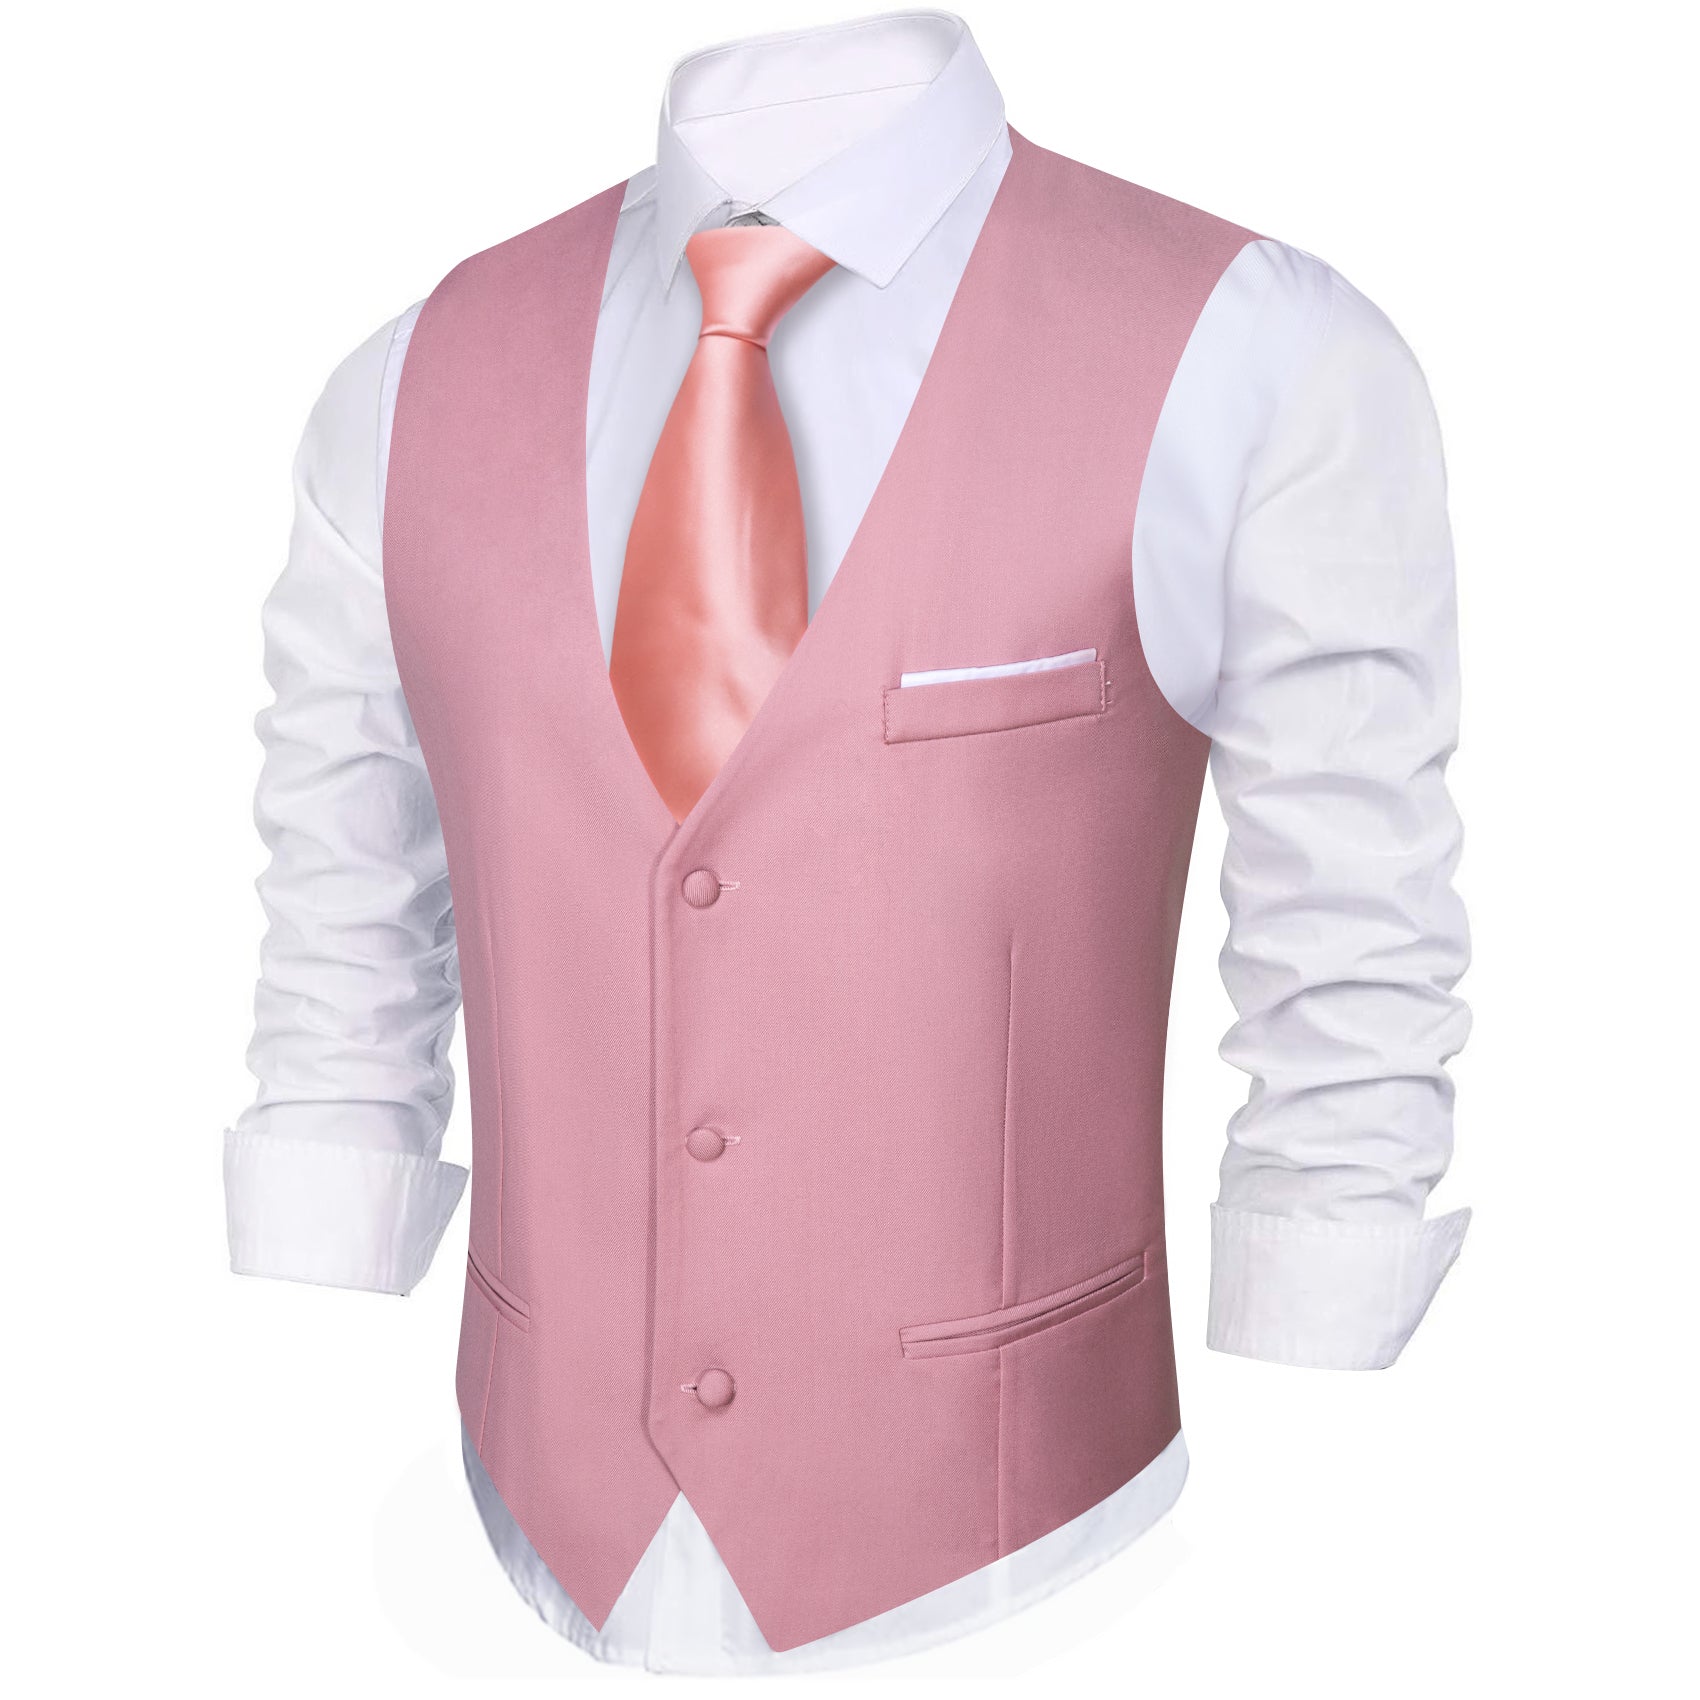 Fashion Pink Solid V-Neck Waistcoat Vest for Business